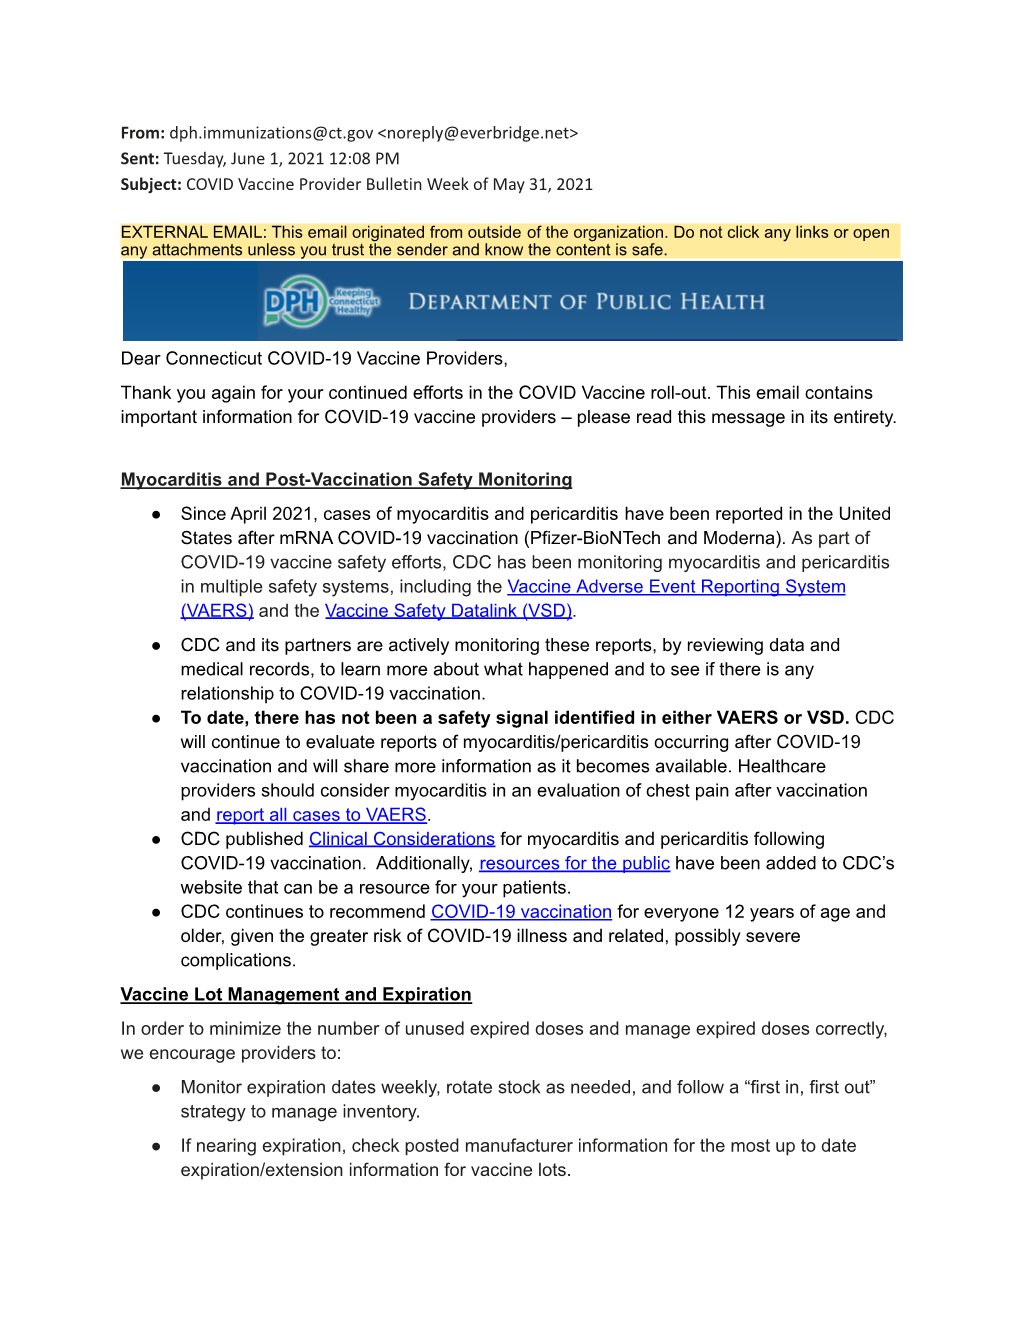 COVID Vaccine Provider Bulletin Week of May 31, 2021